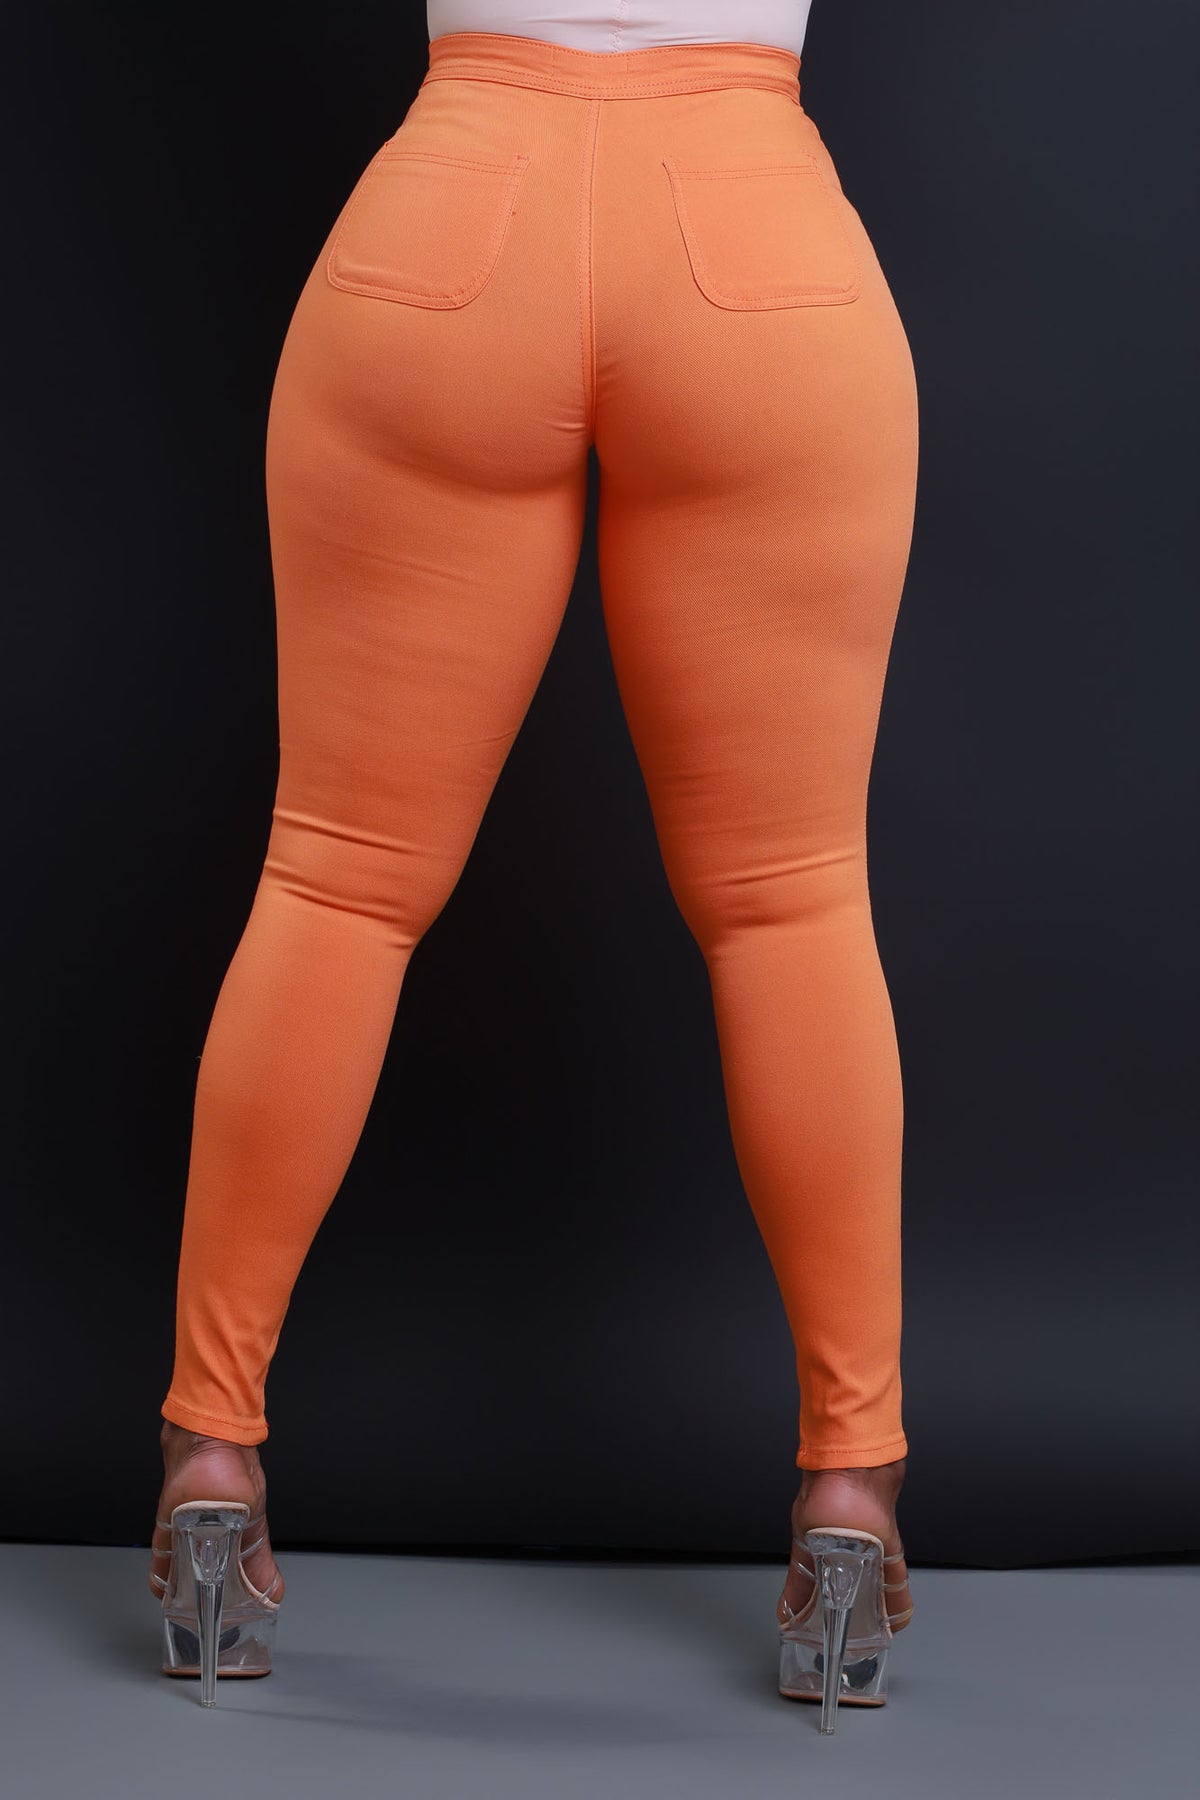 
              $15.99 Super Swank High Waist Stretchy Jeans - Orange - Swank A Posh
            